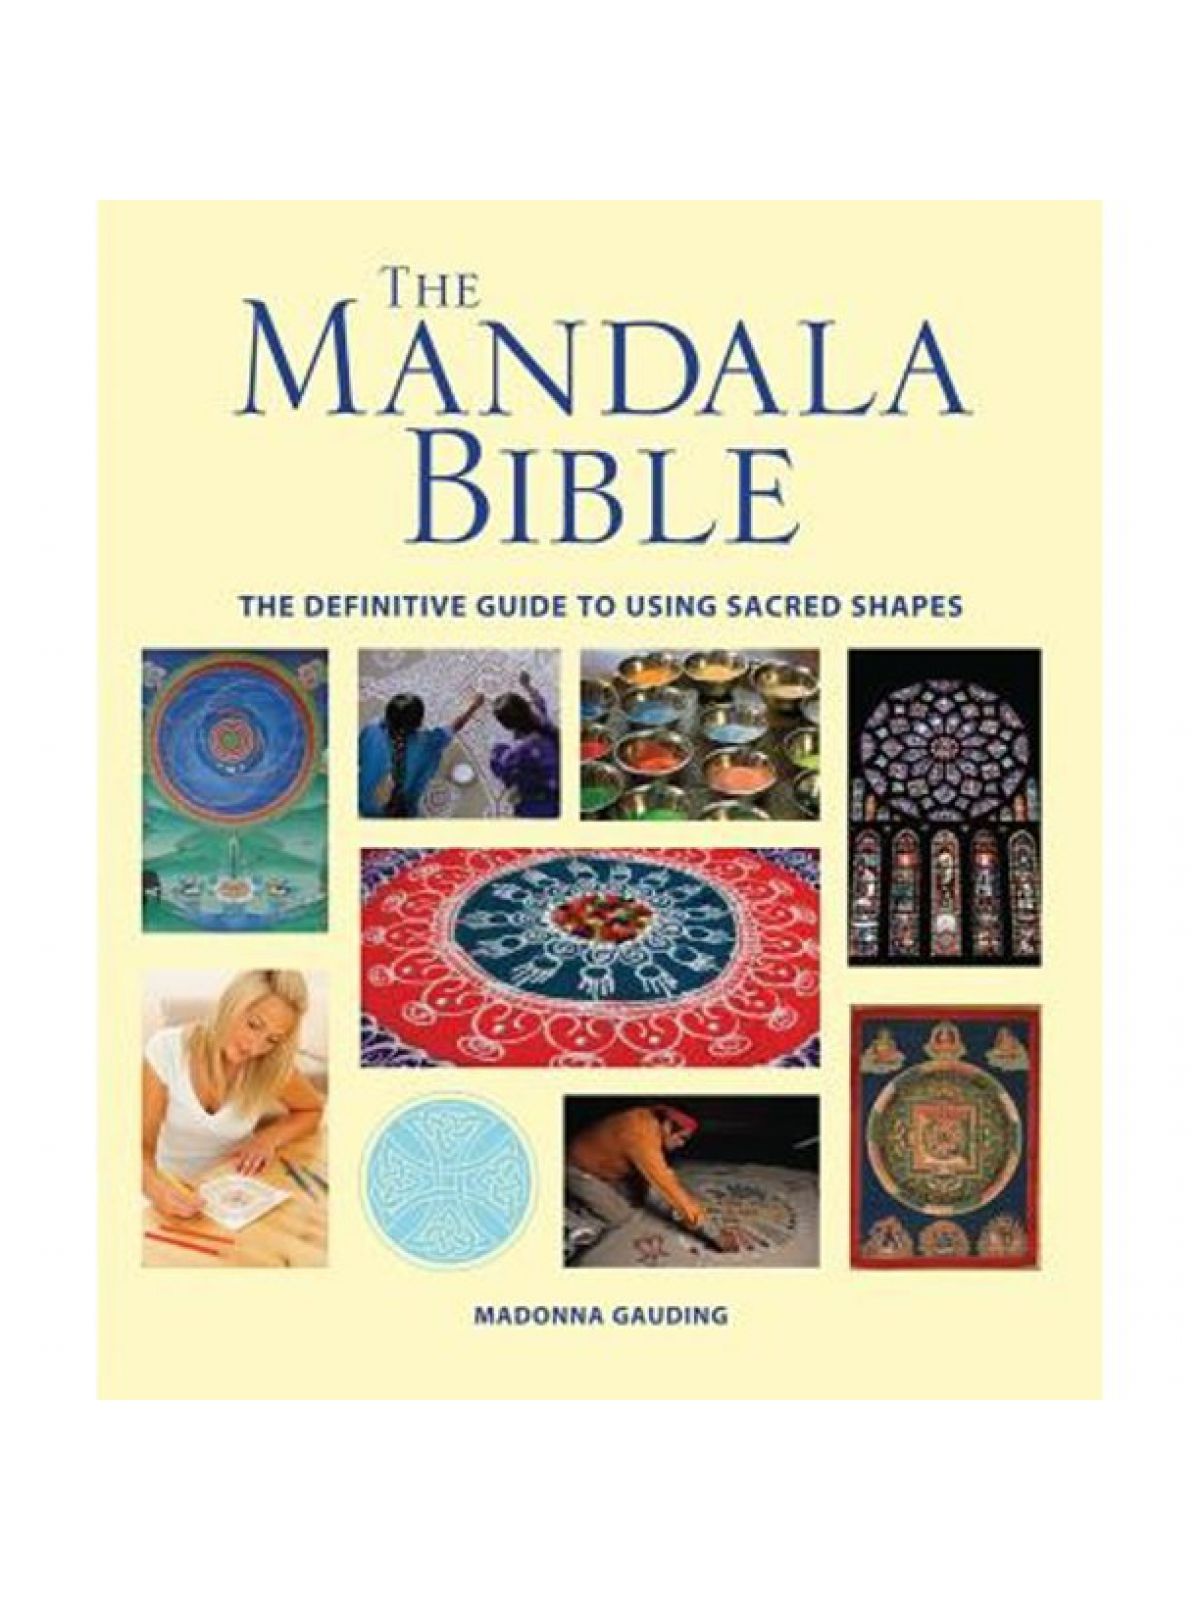 MANDALA BIBLE